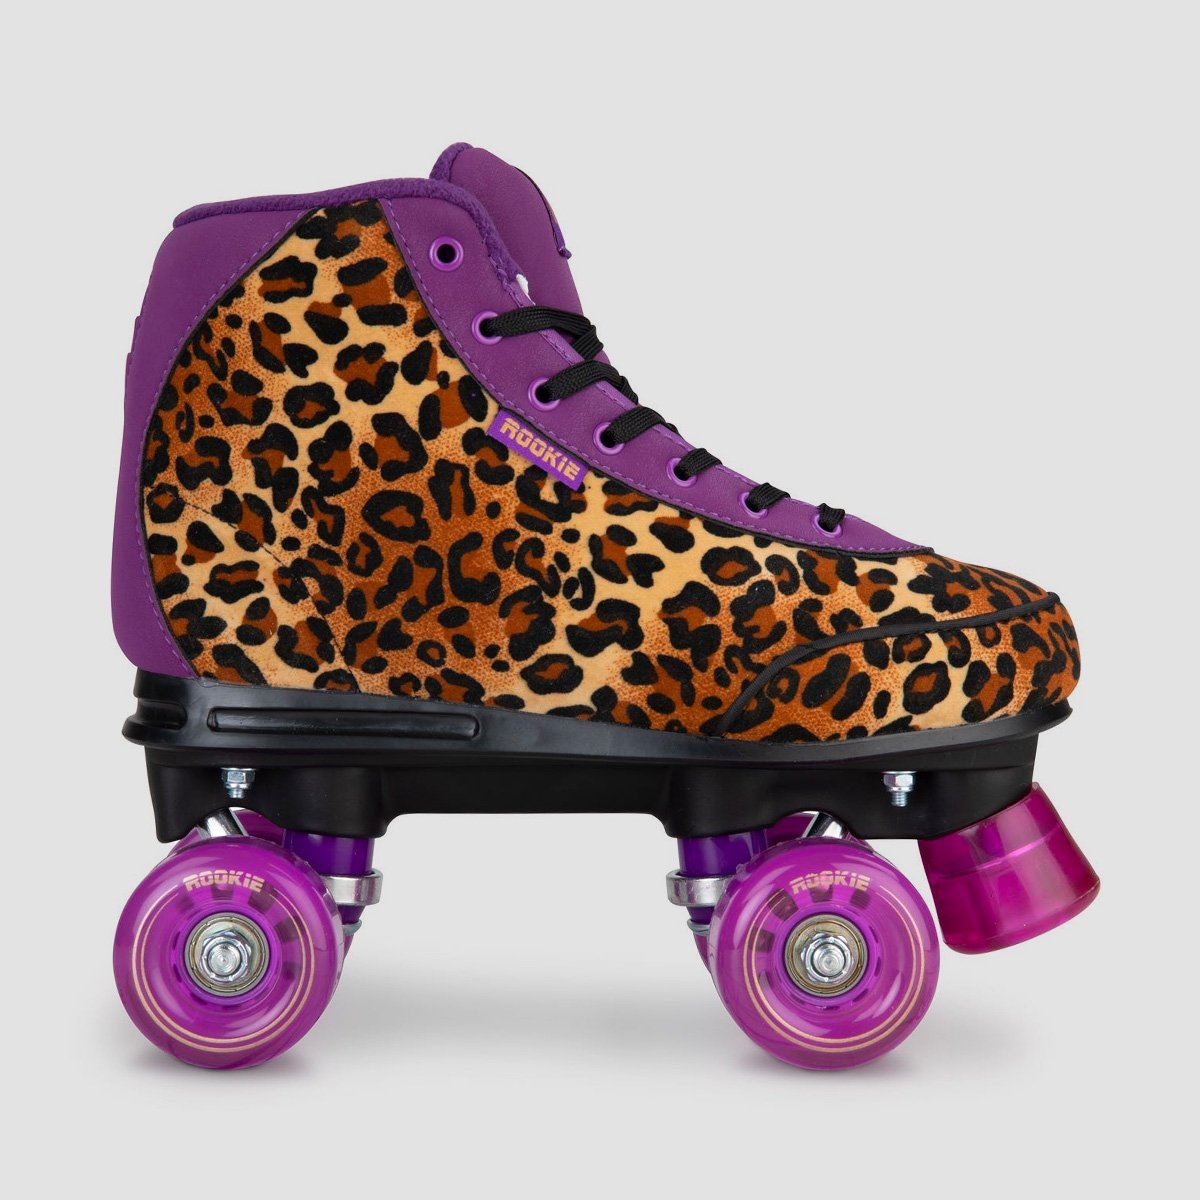 Rookie Harmony Quad Skates Leopard